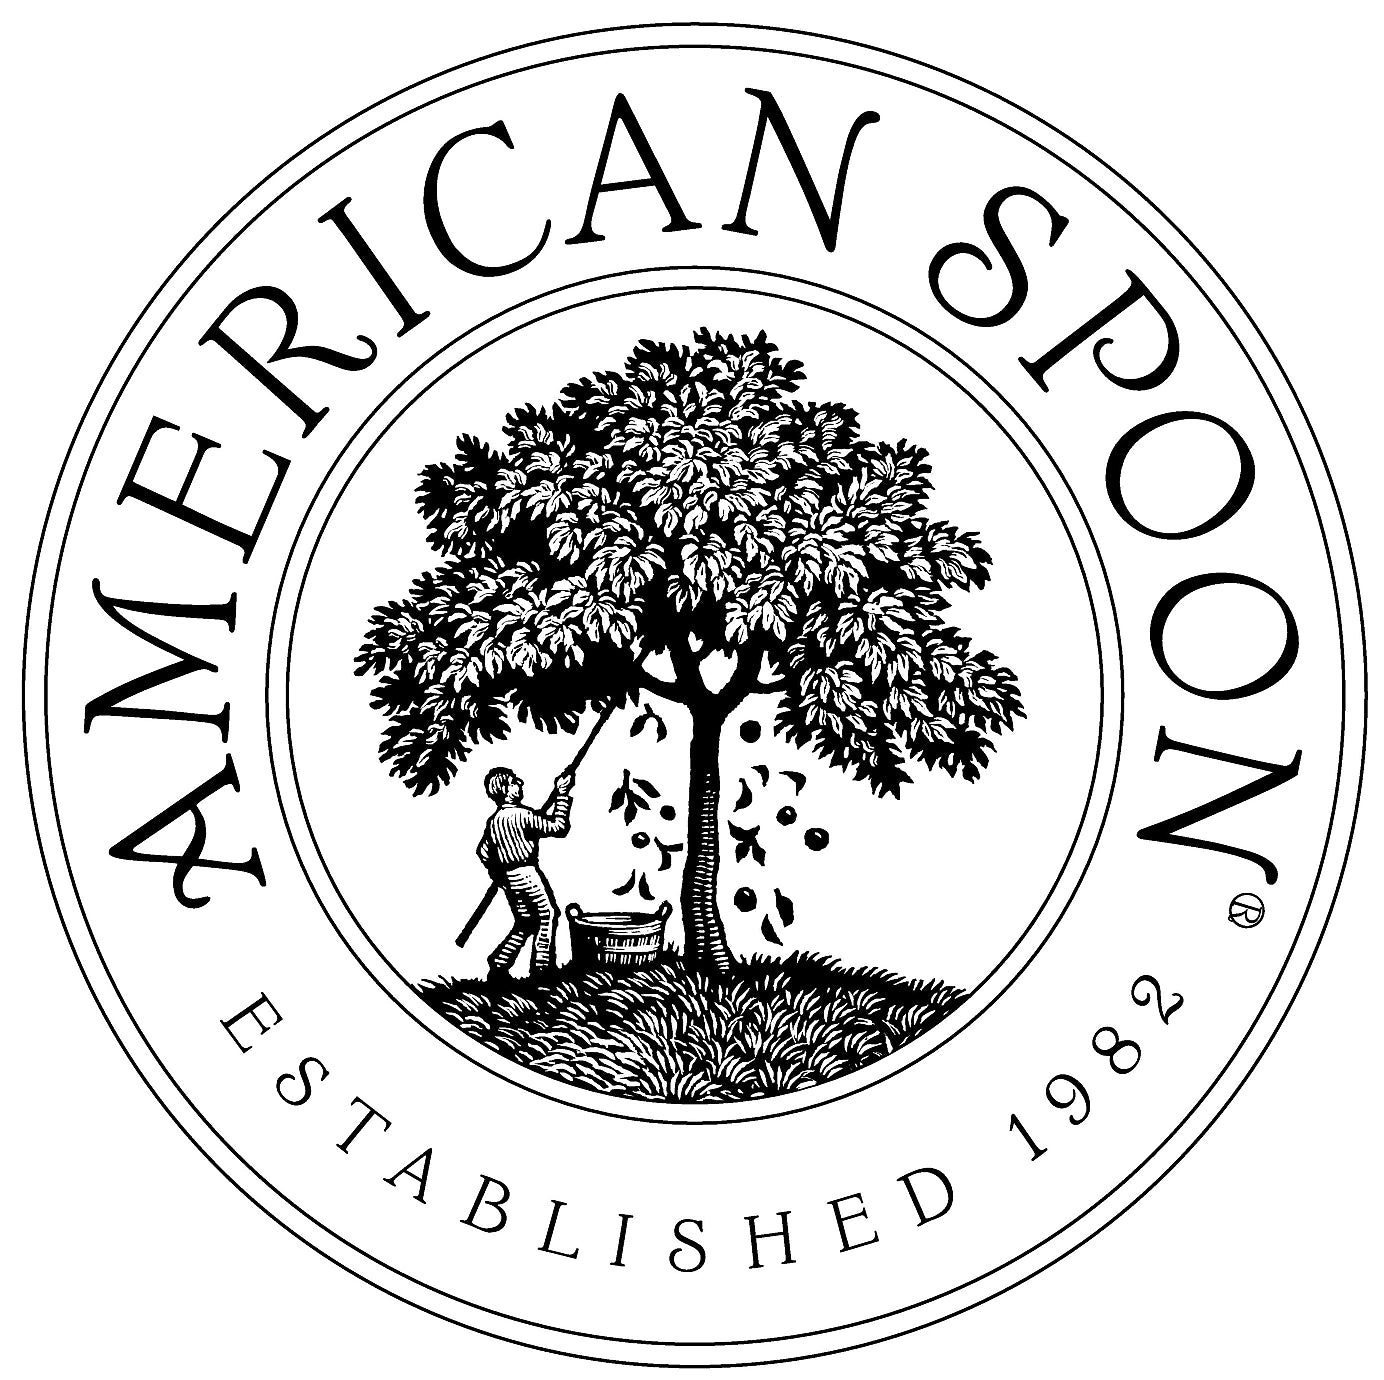 Fall Breakfast Box – American Spoon